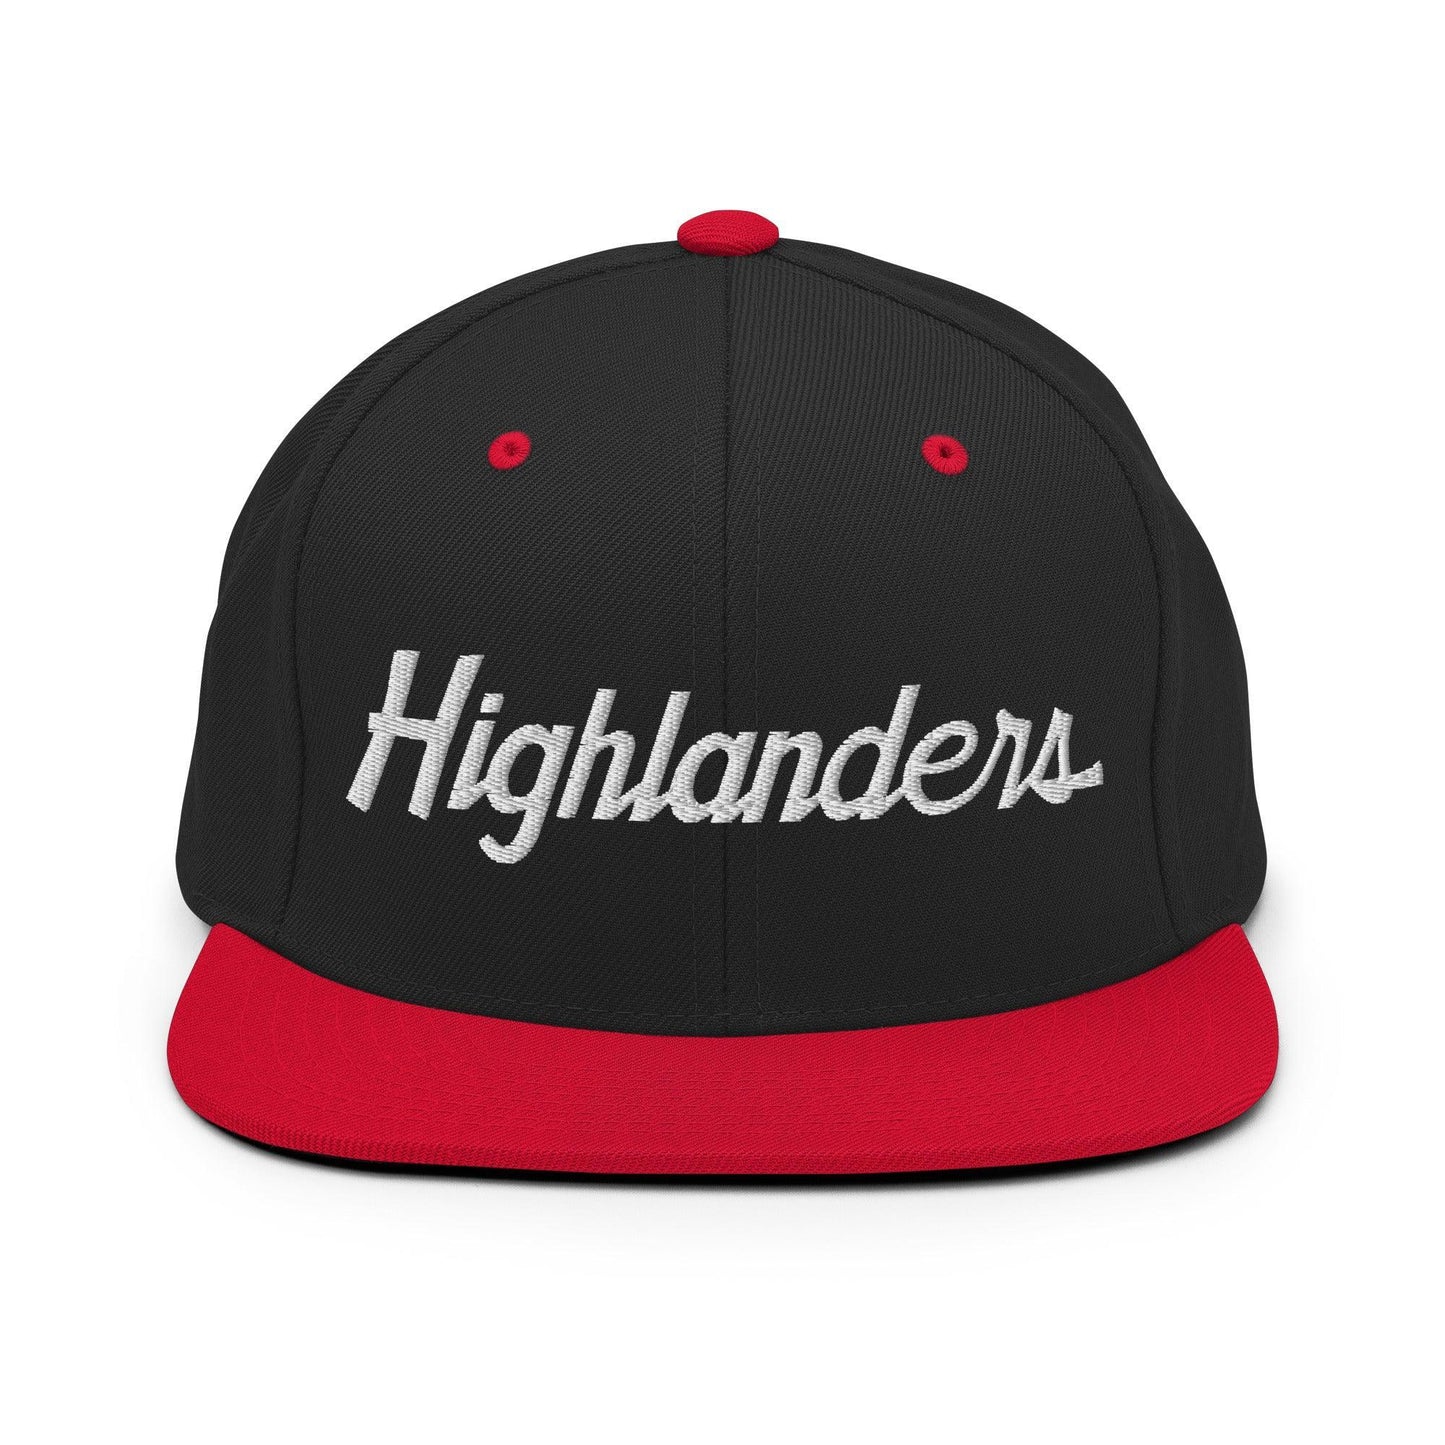 Highlanders School Mascot Script Snapback Hat Black/ Red